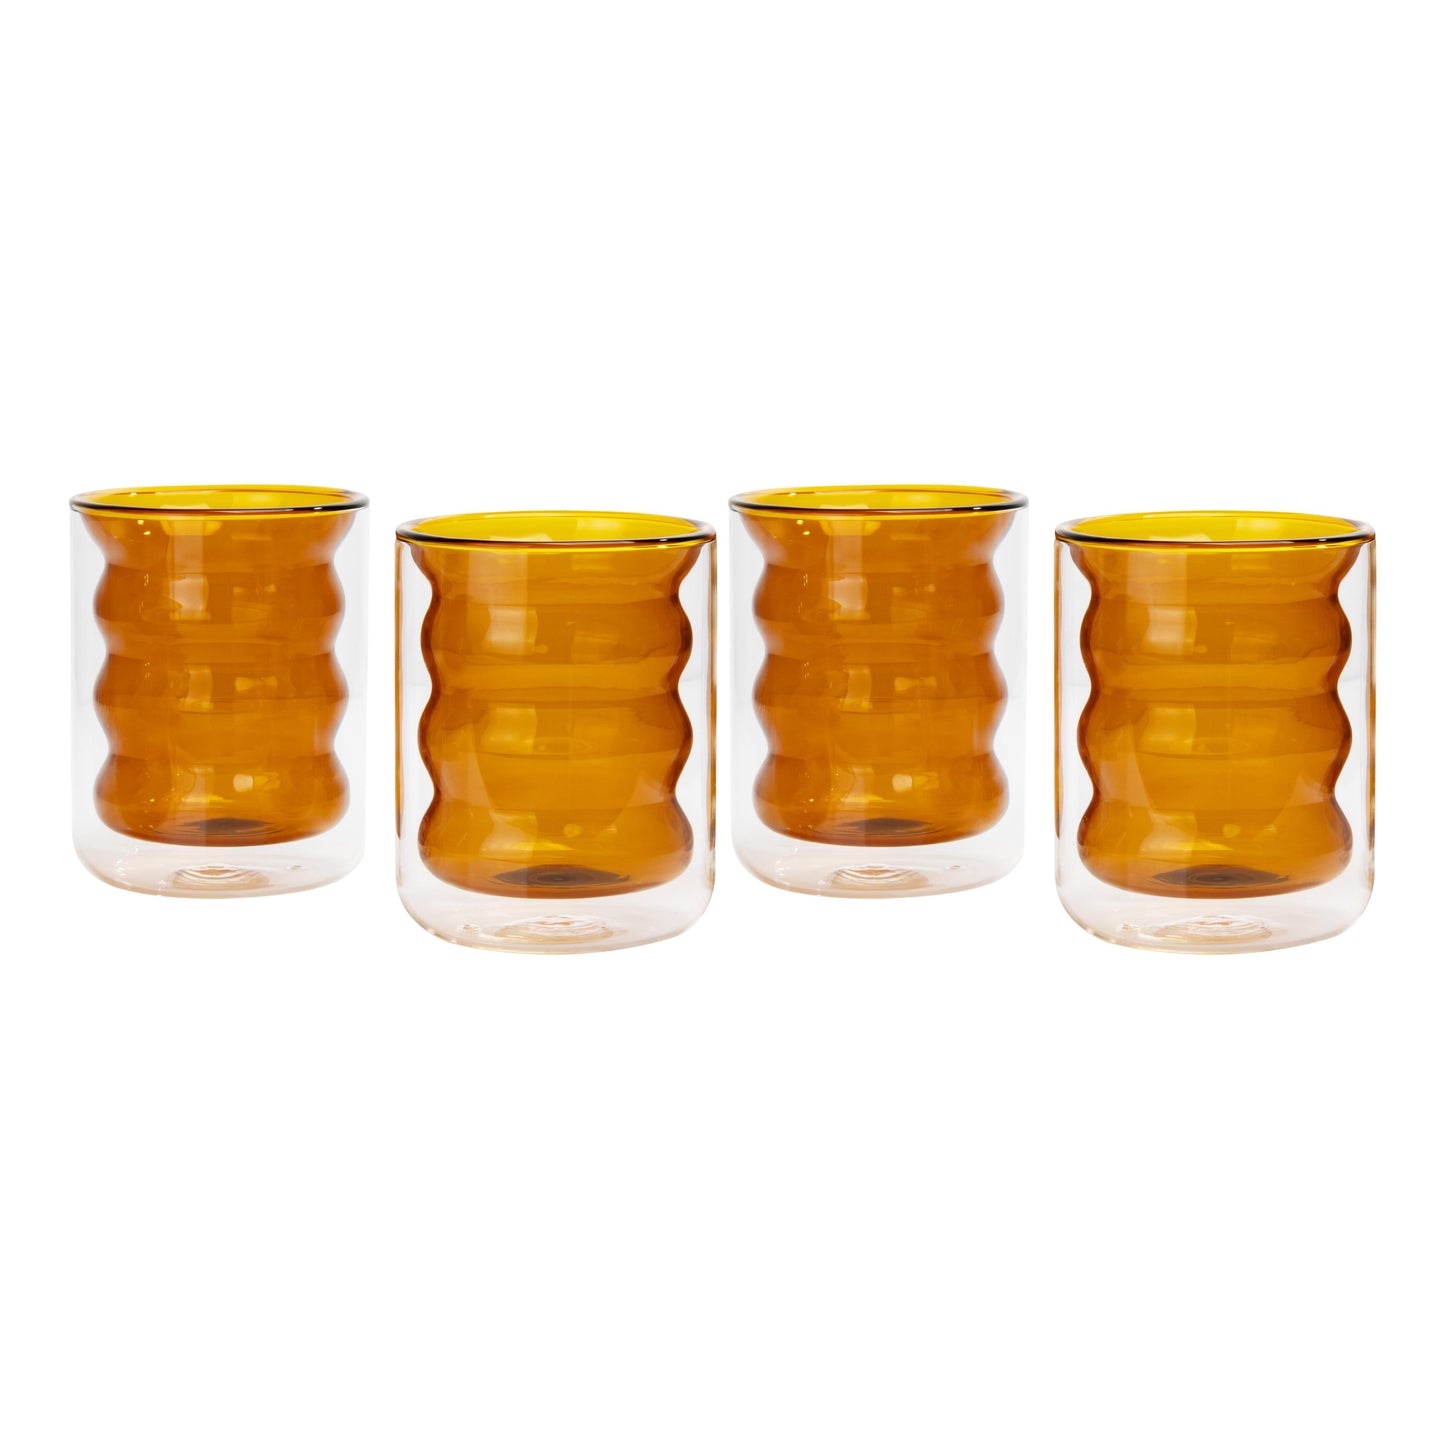 caren amber water glass - set of 4